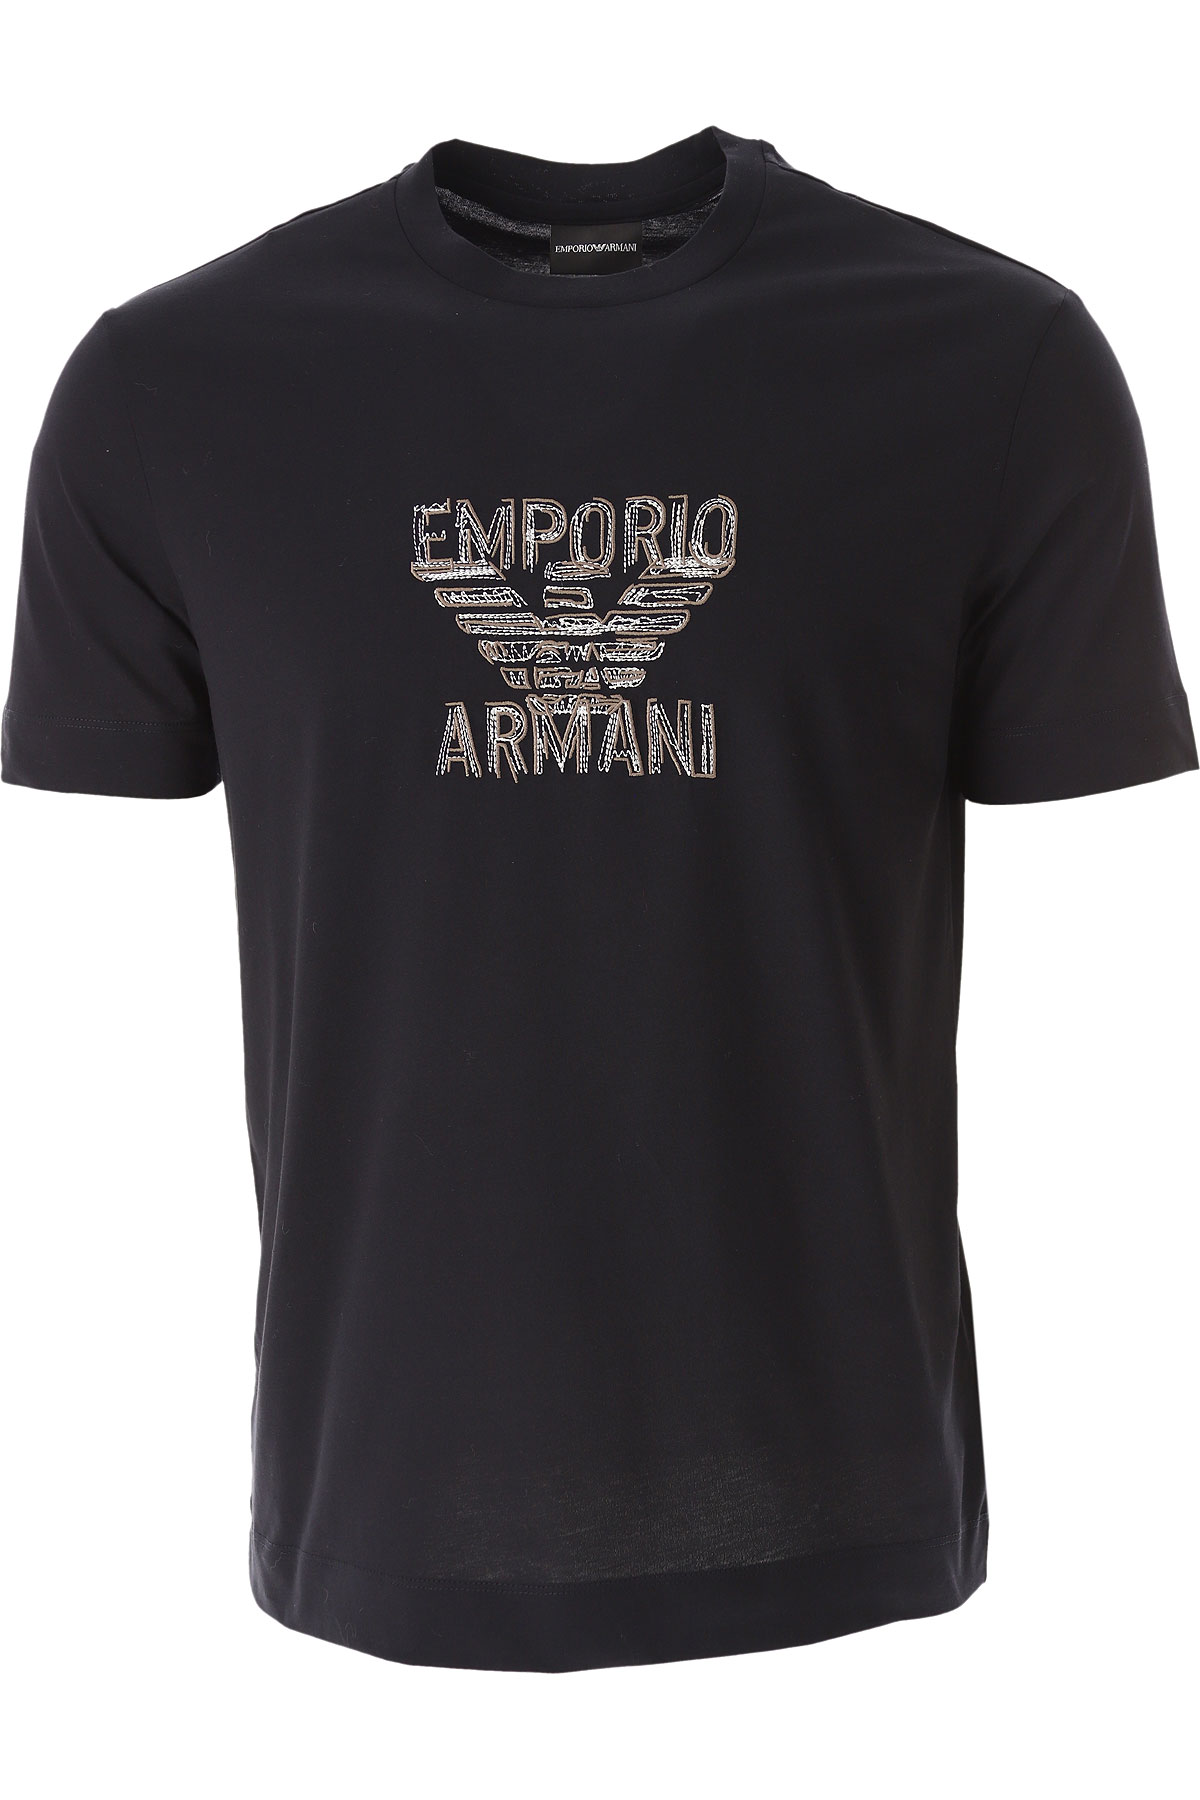 Mens Clothing Emporio Armani, Style code: 6r1t74-1jpzz-09q8